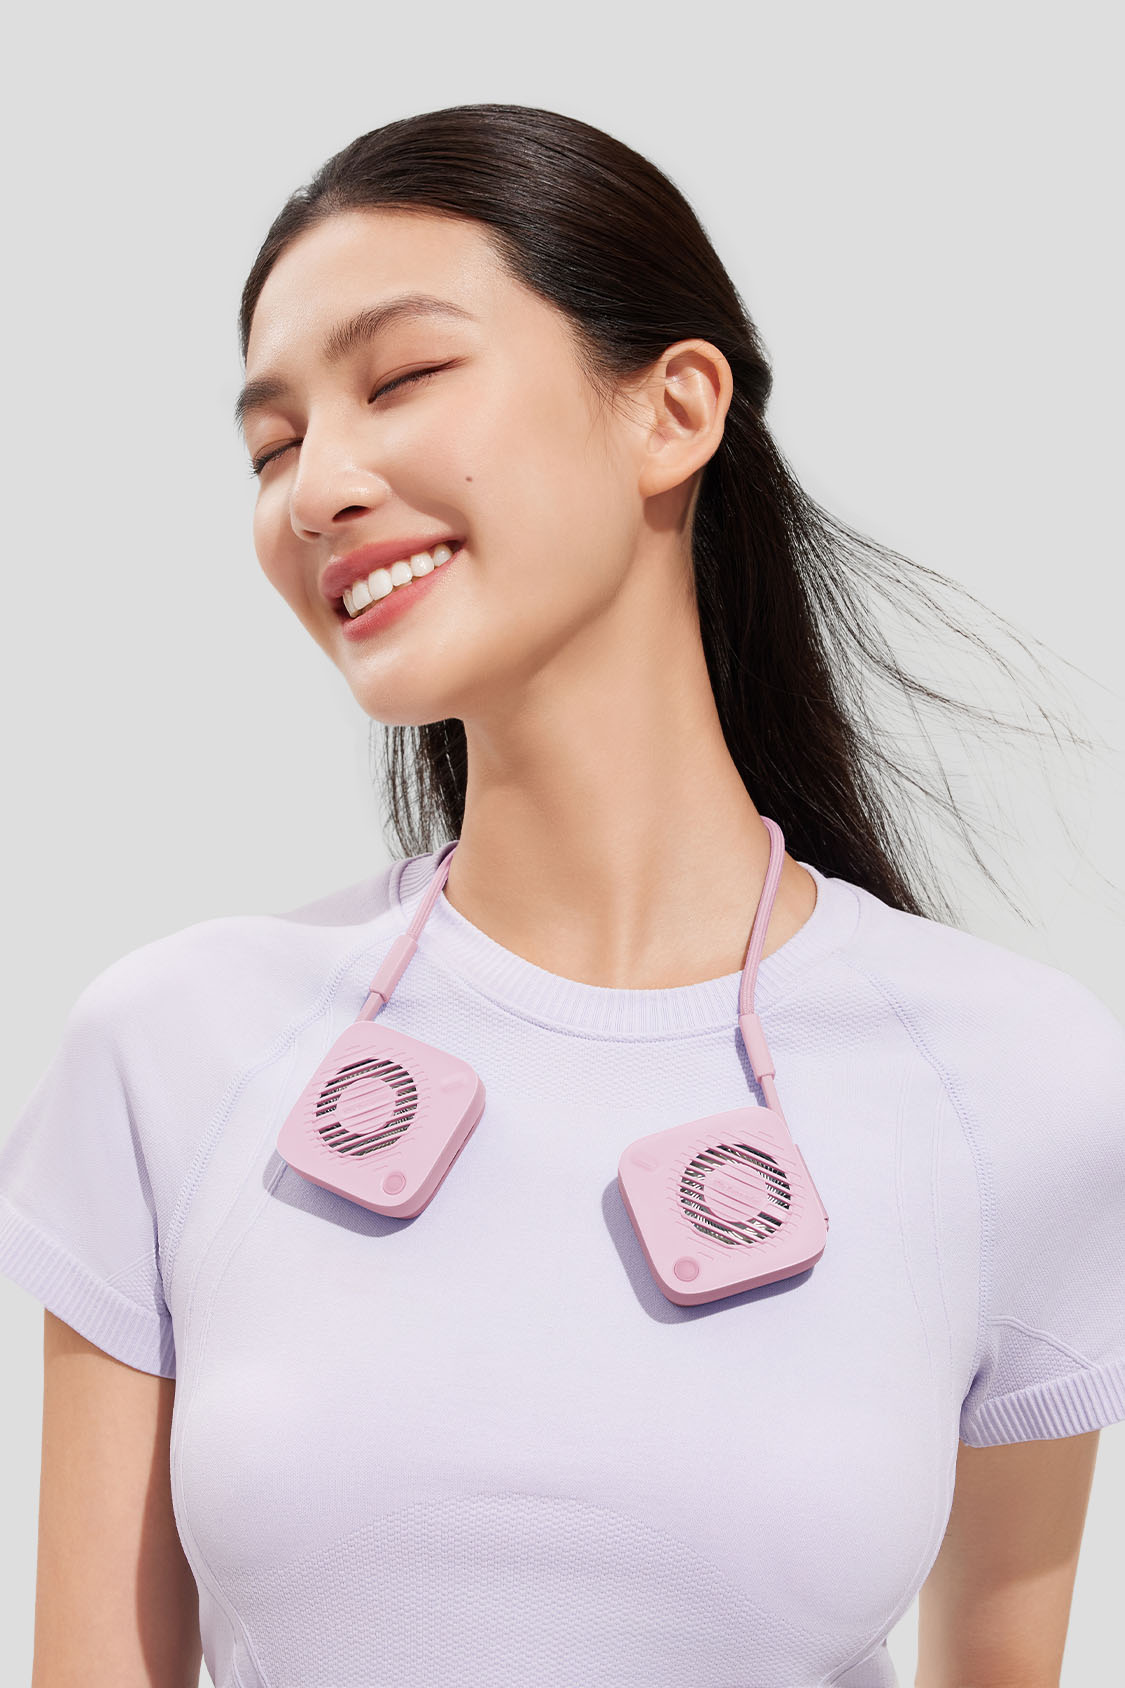 beneunder portable neck fan cooling #color_taro pink